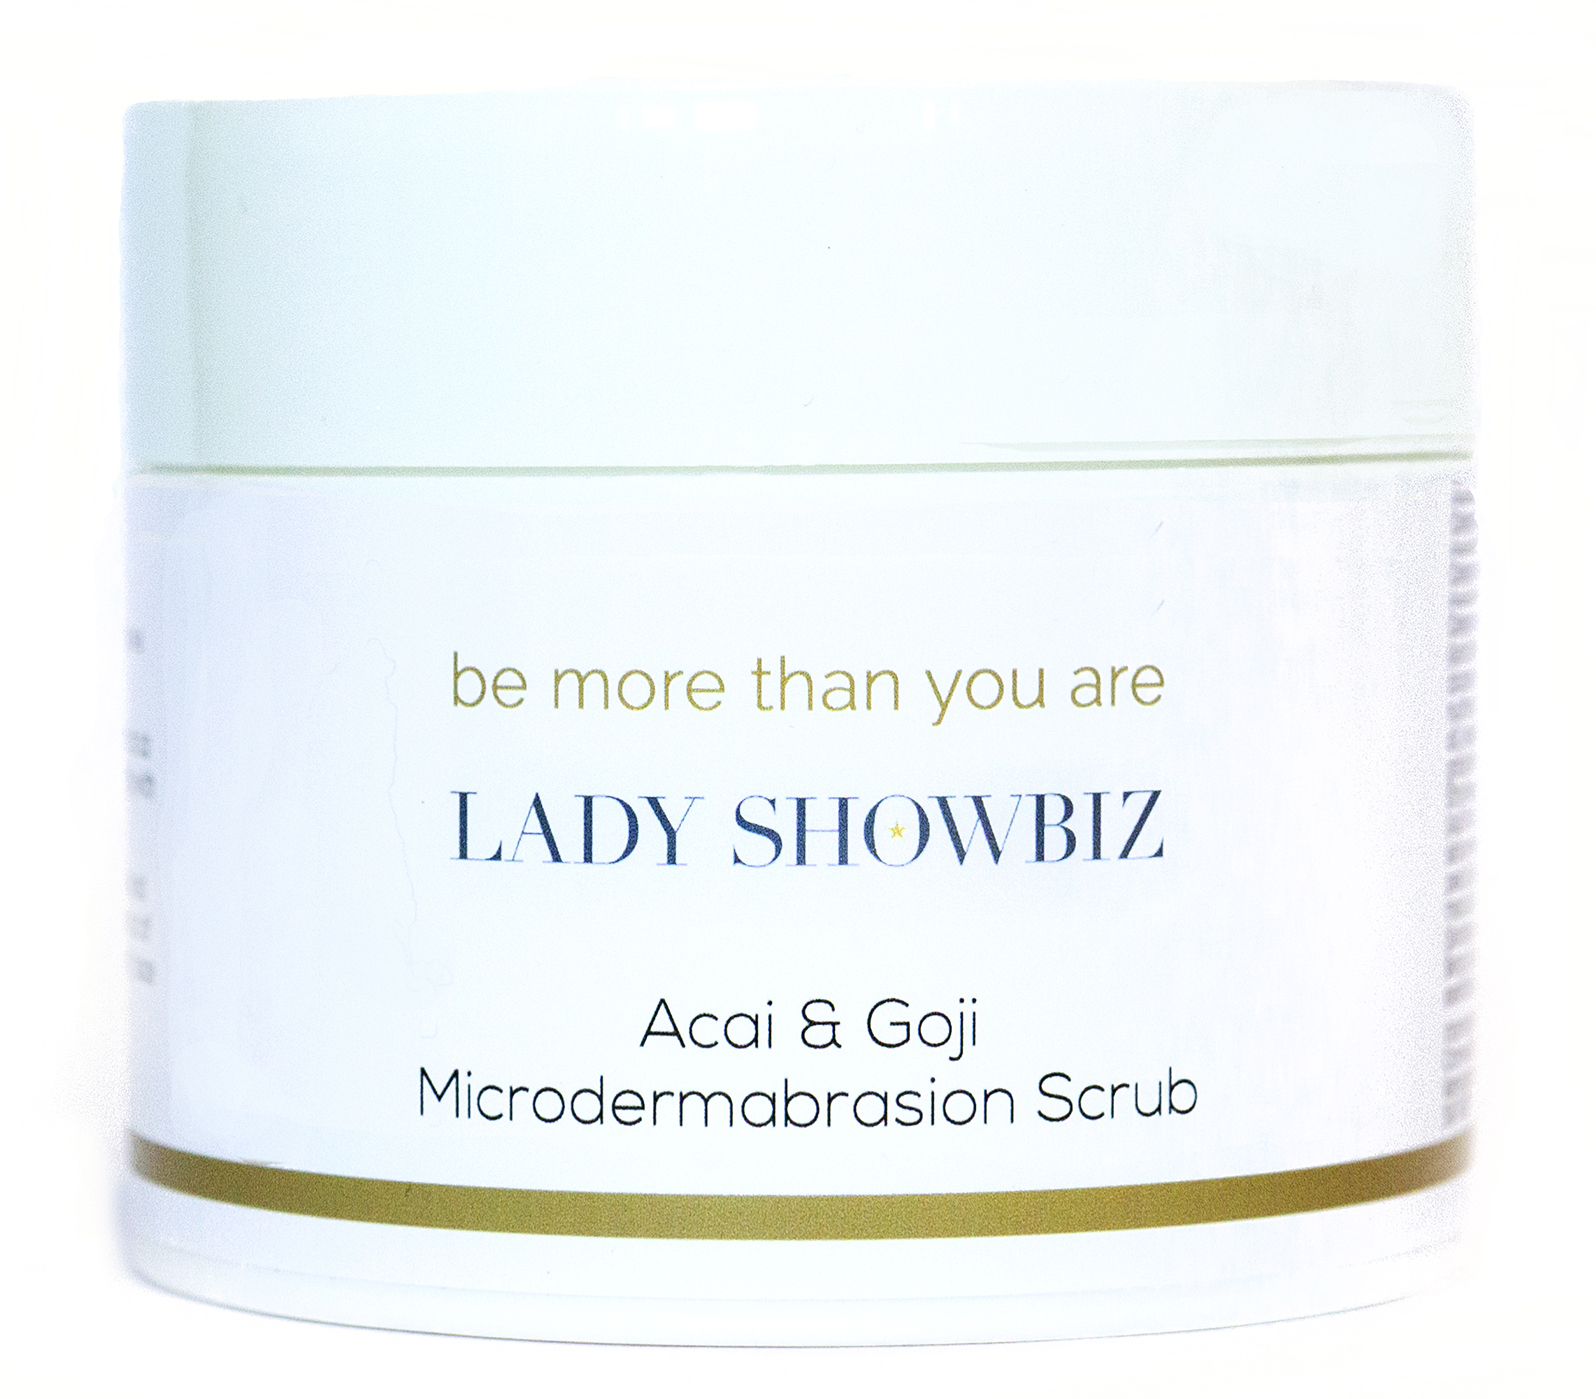 Lady Showbiz Acai & Goji Microdermabrasion Scrub